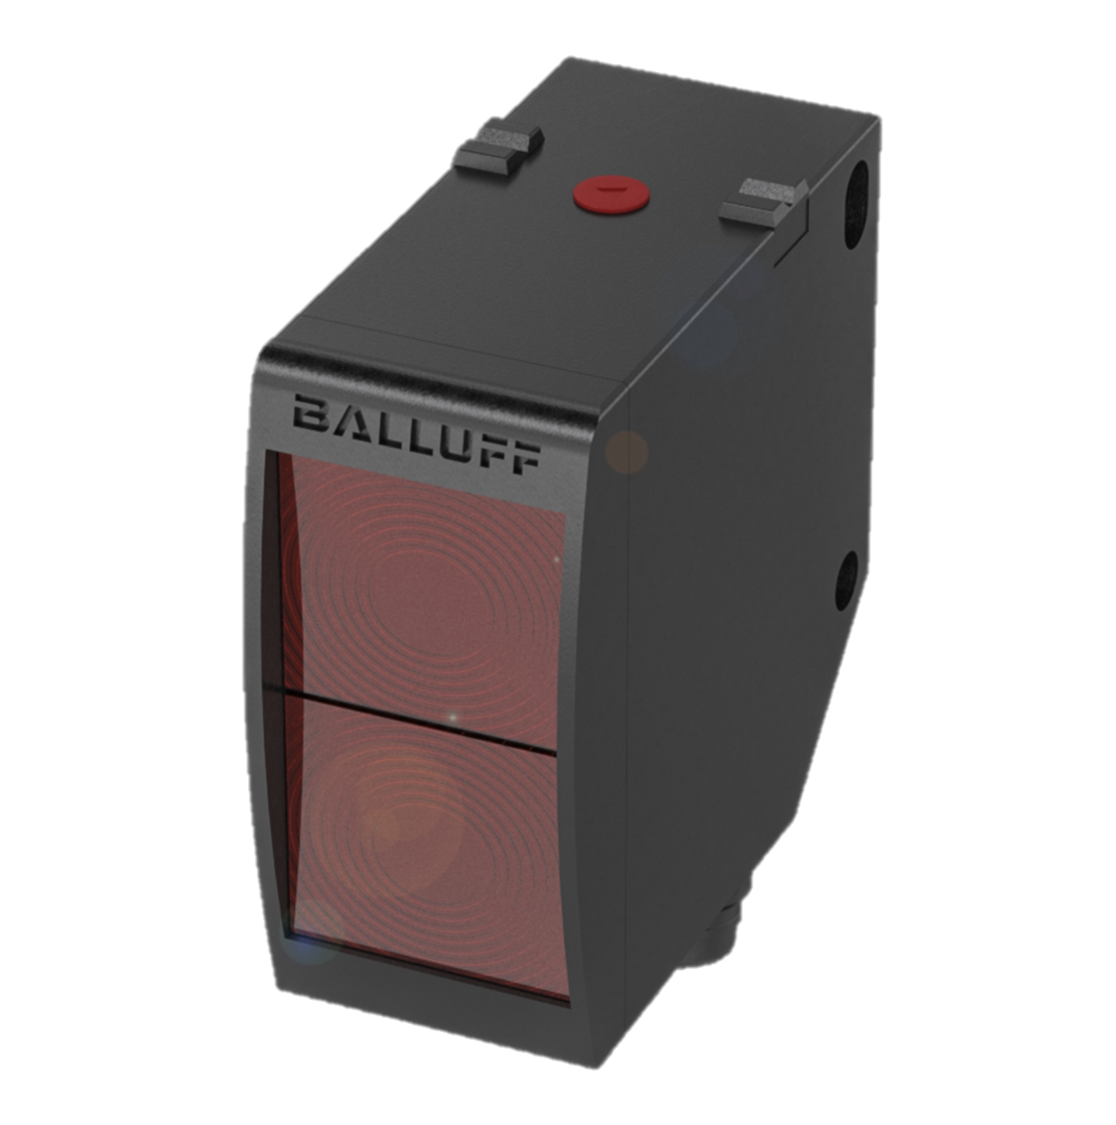 Balluff Optosensor.png